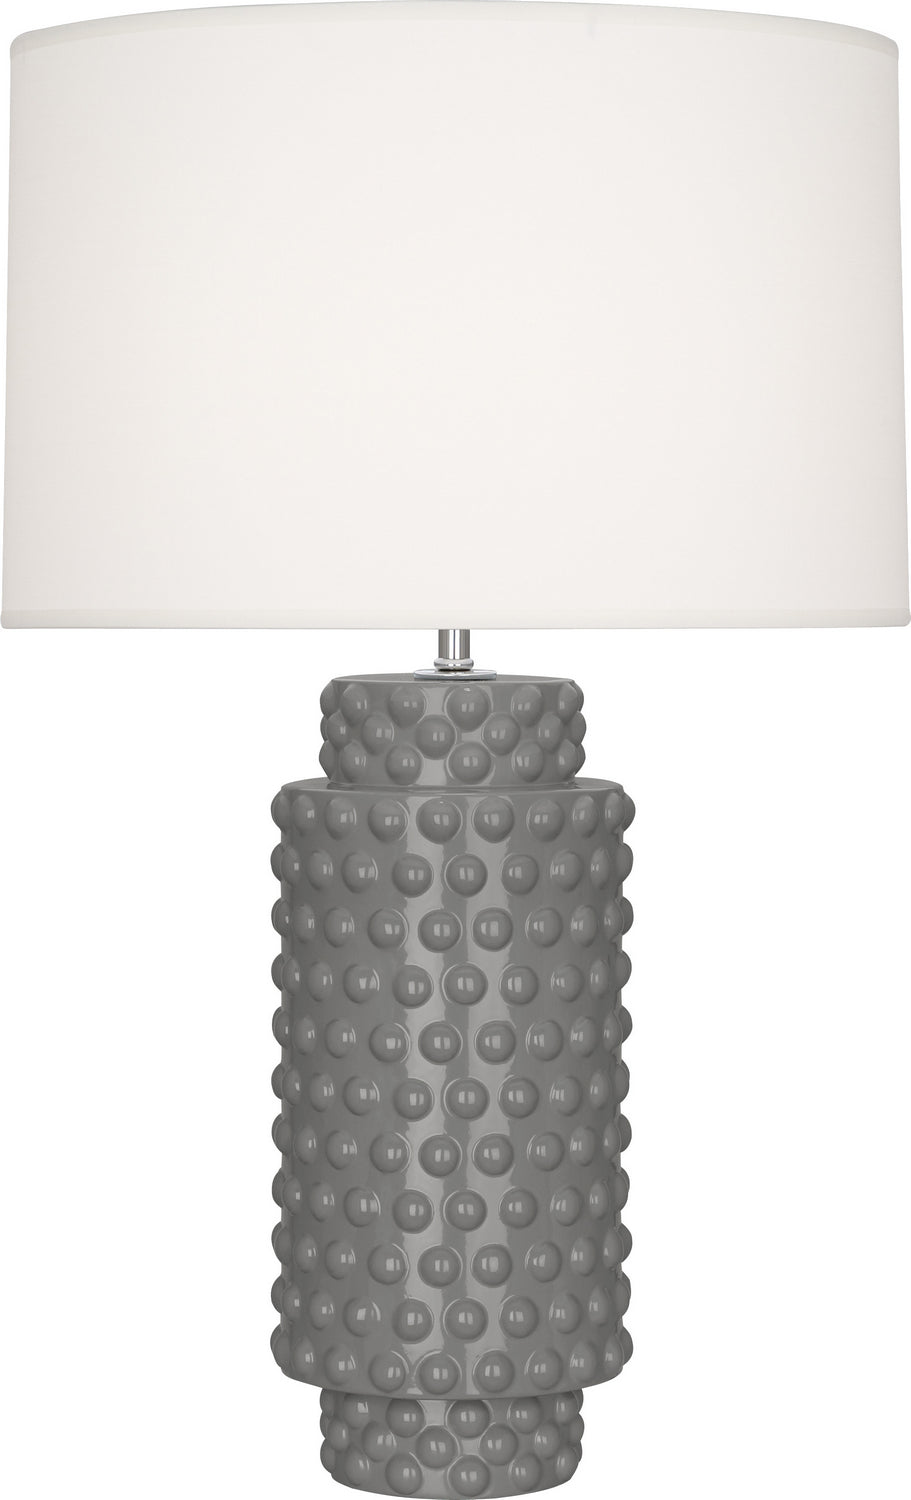 Robert Abbey - One Light Table Lamp - Dolly - Smoky Taupe Glazed Textured Ceramic- Union Lighting Luminaires Decor